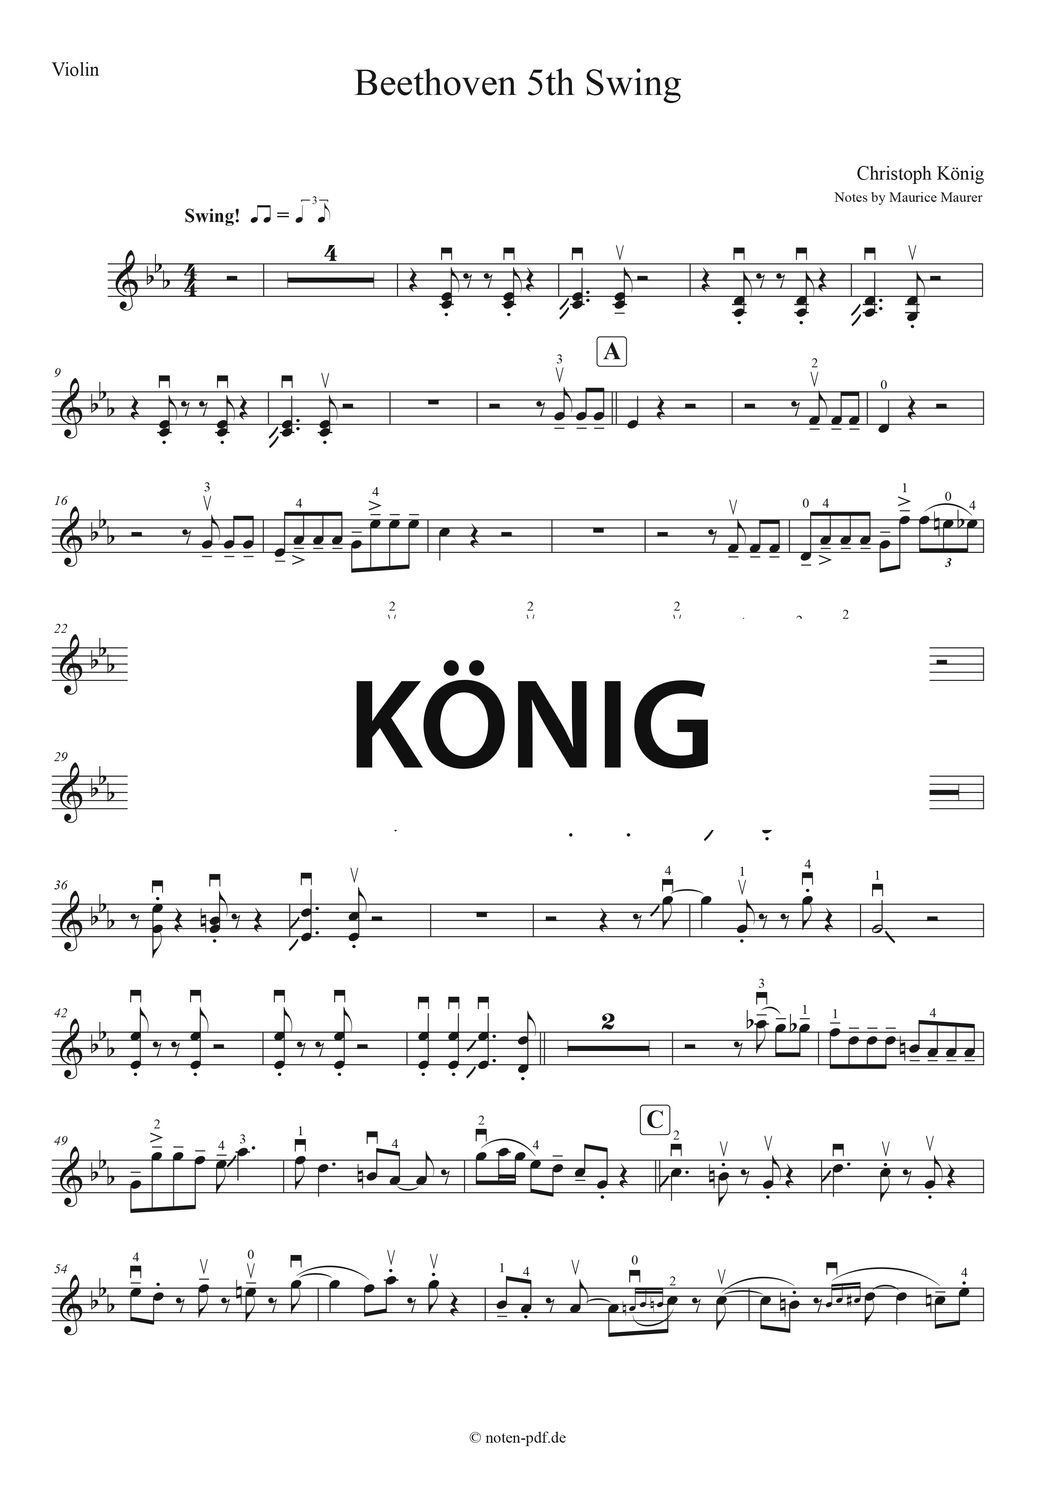 König: Beethoven 5th Swing